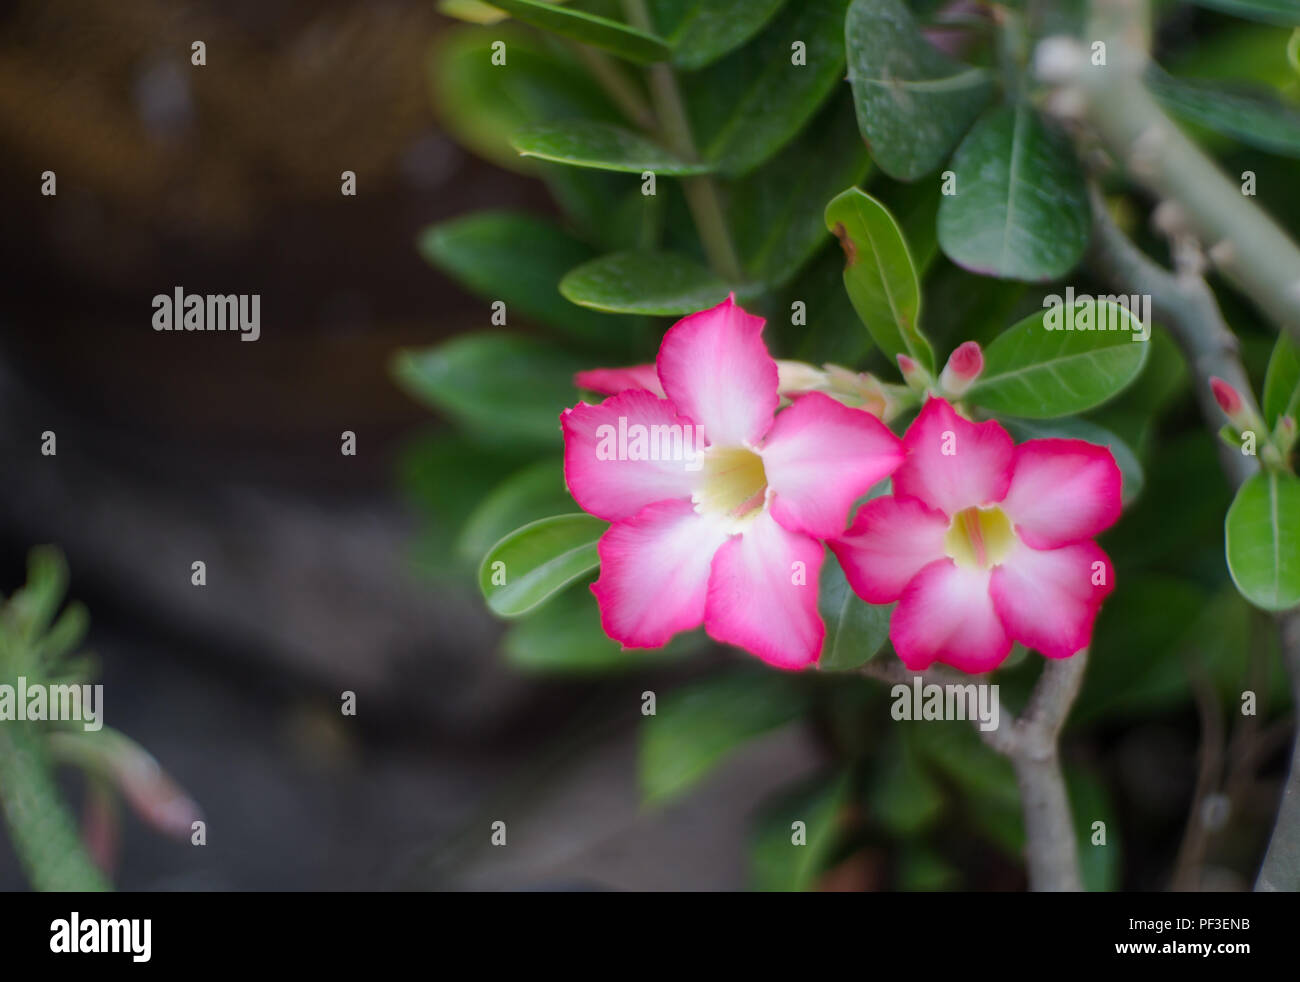 close up pink adenium obesum or desert Rose flower Stock Photo - Alamy